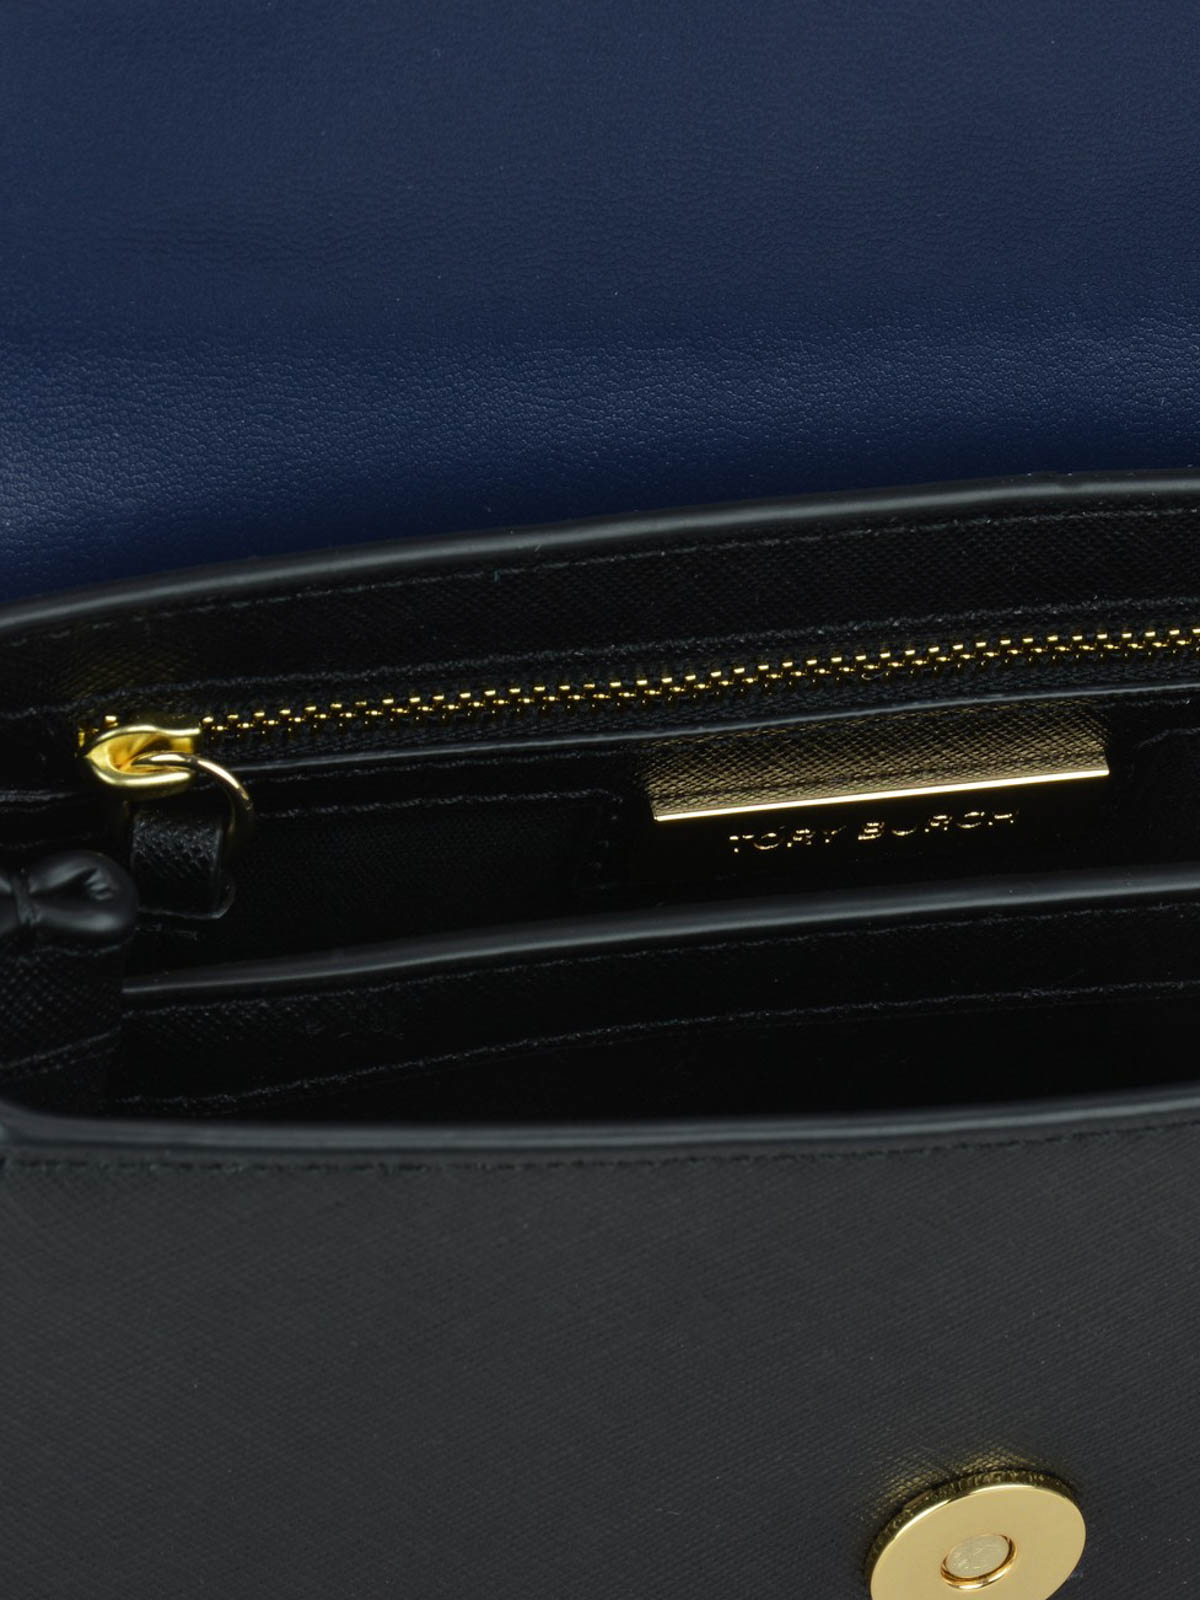 Robinson Round Saffiano Leather Crossbody Bag In Black/gold